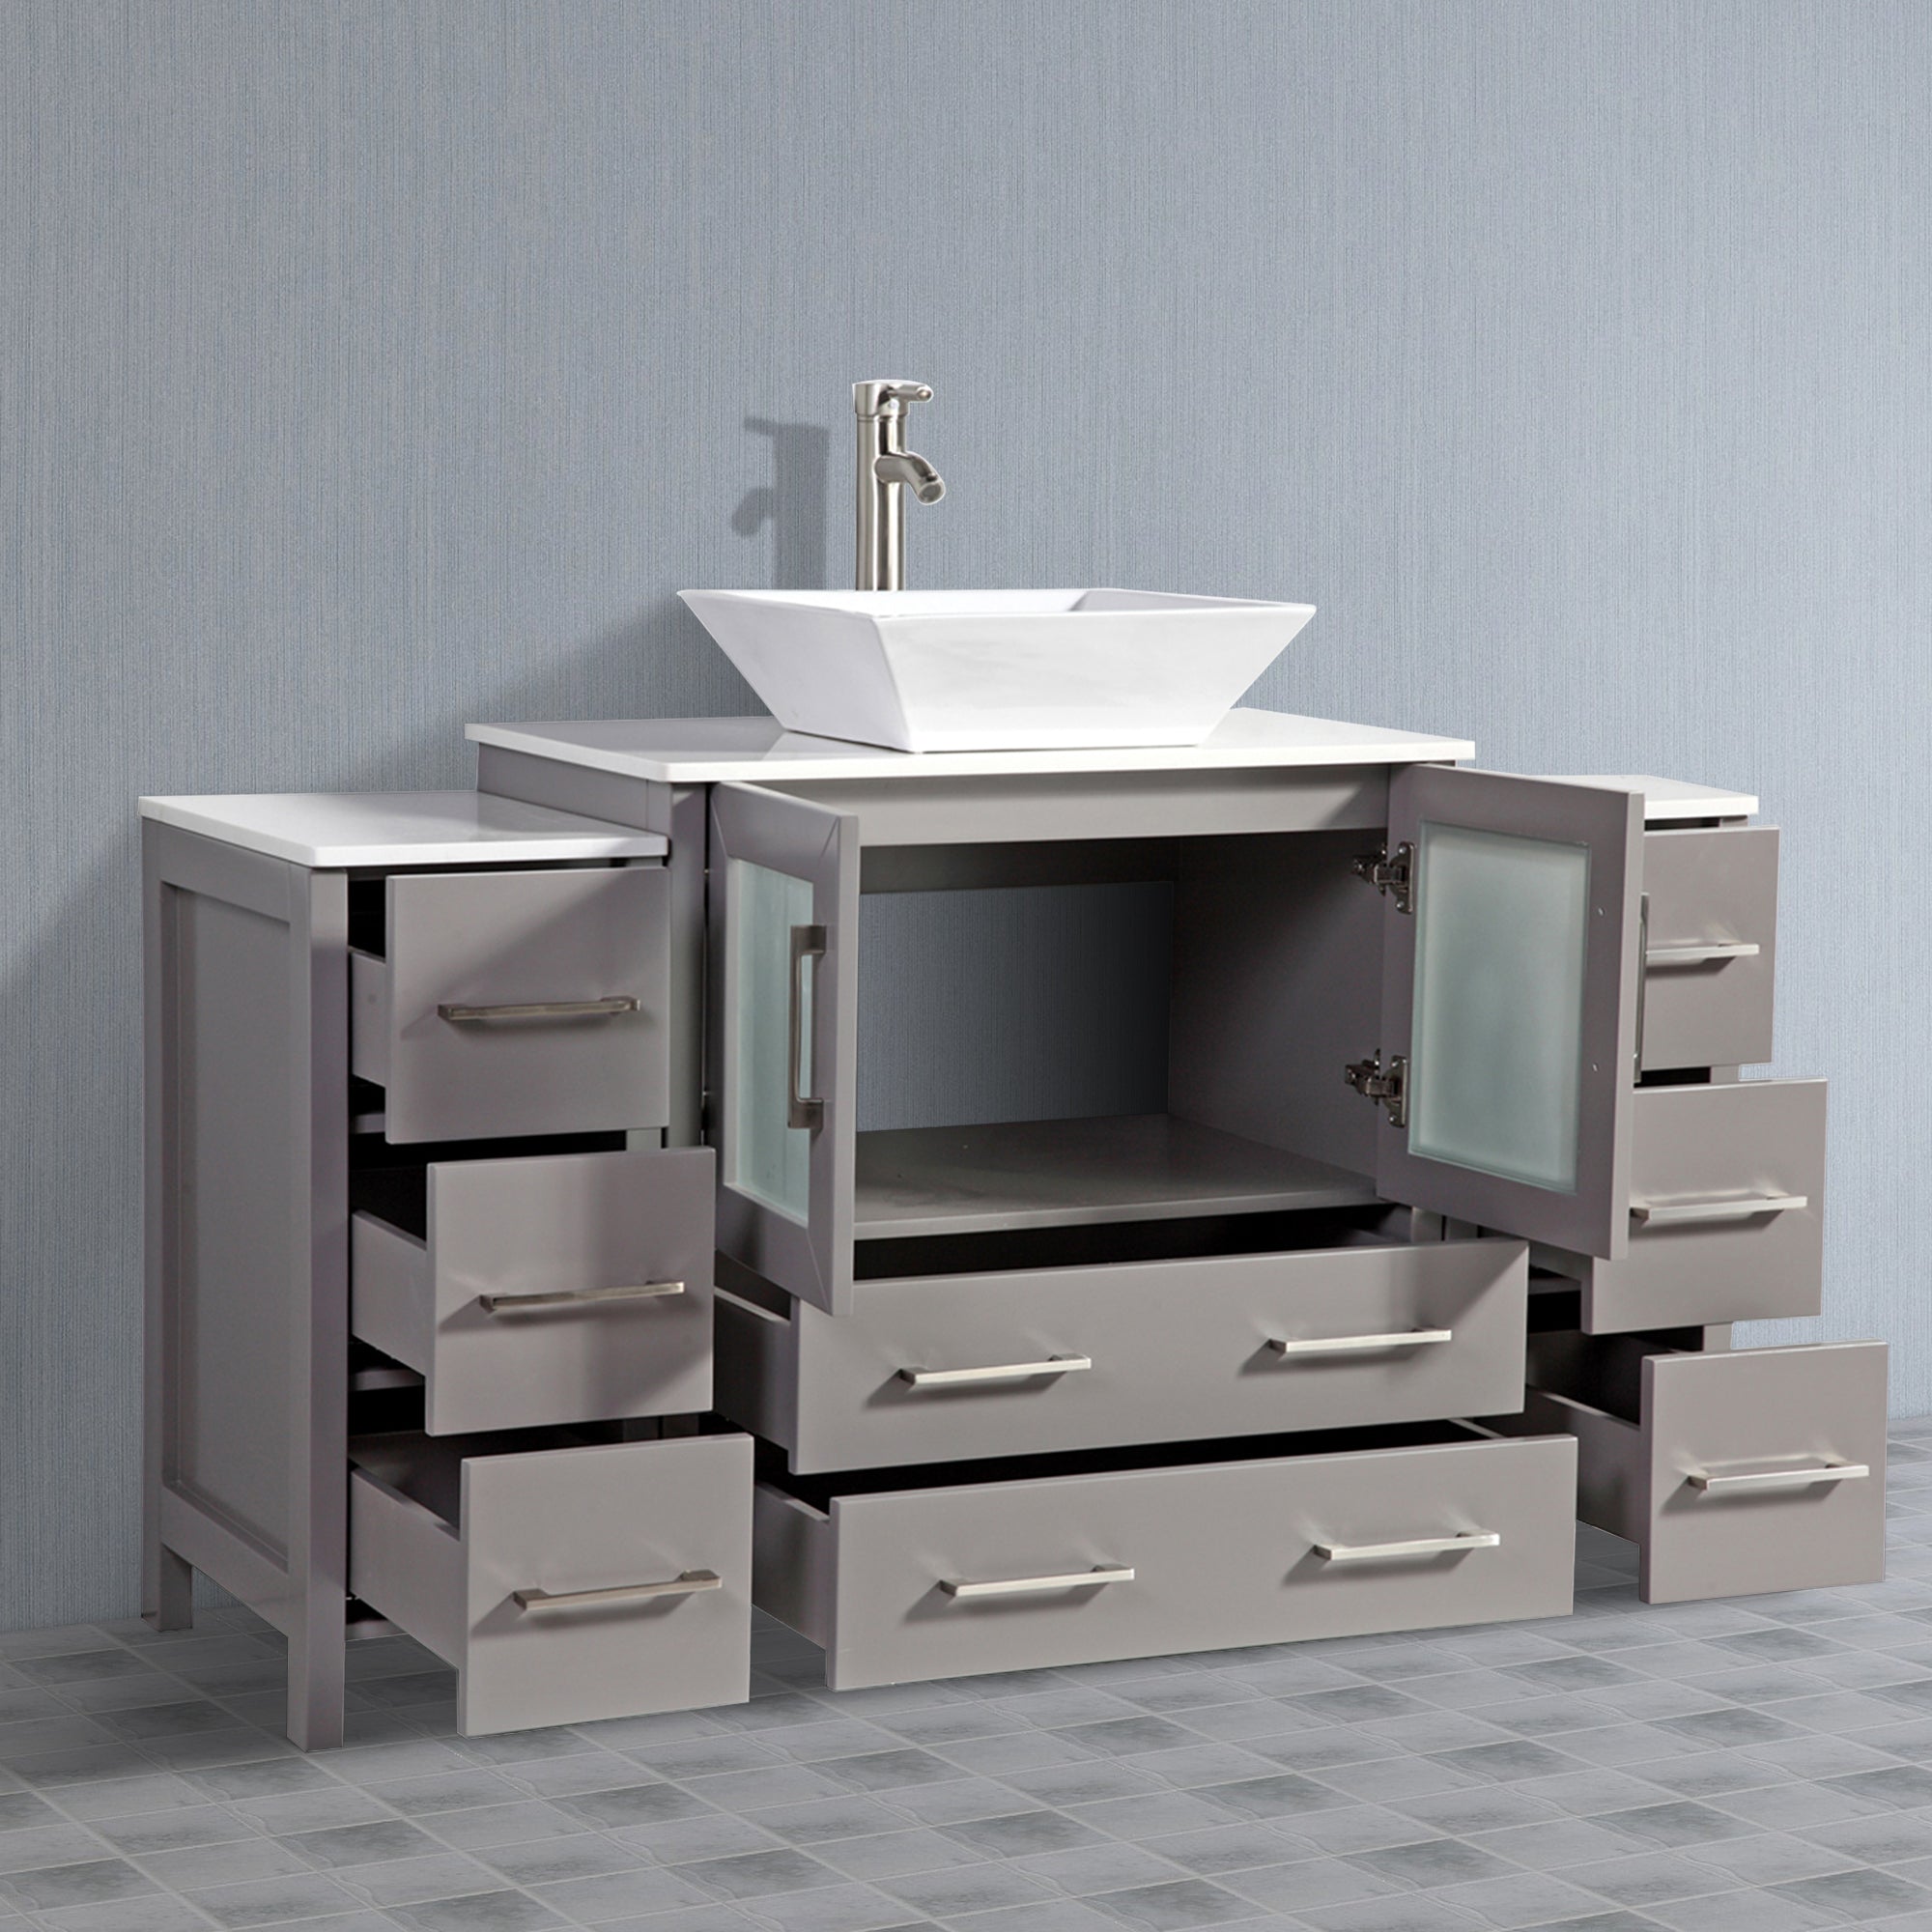 Vanity Art - Monaco 54" Single Vessel Sink Bathroom Vanity Set with Sink and Mirror - 2 Side Cabinets - Bhdepot 